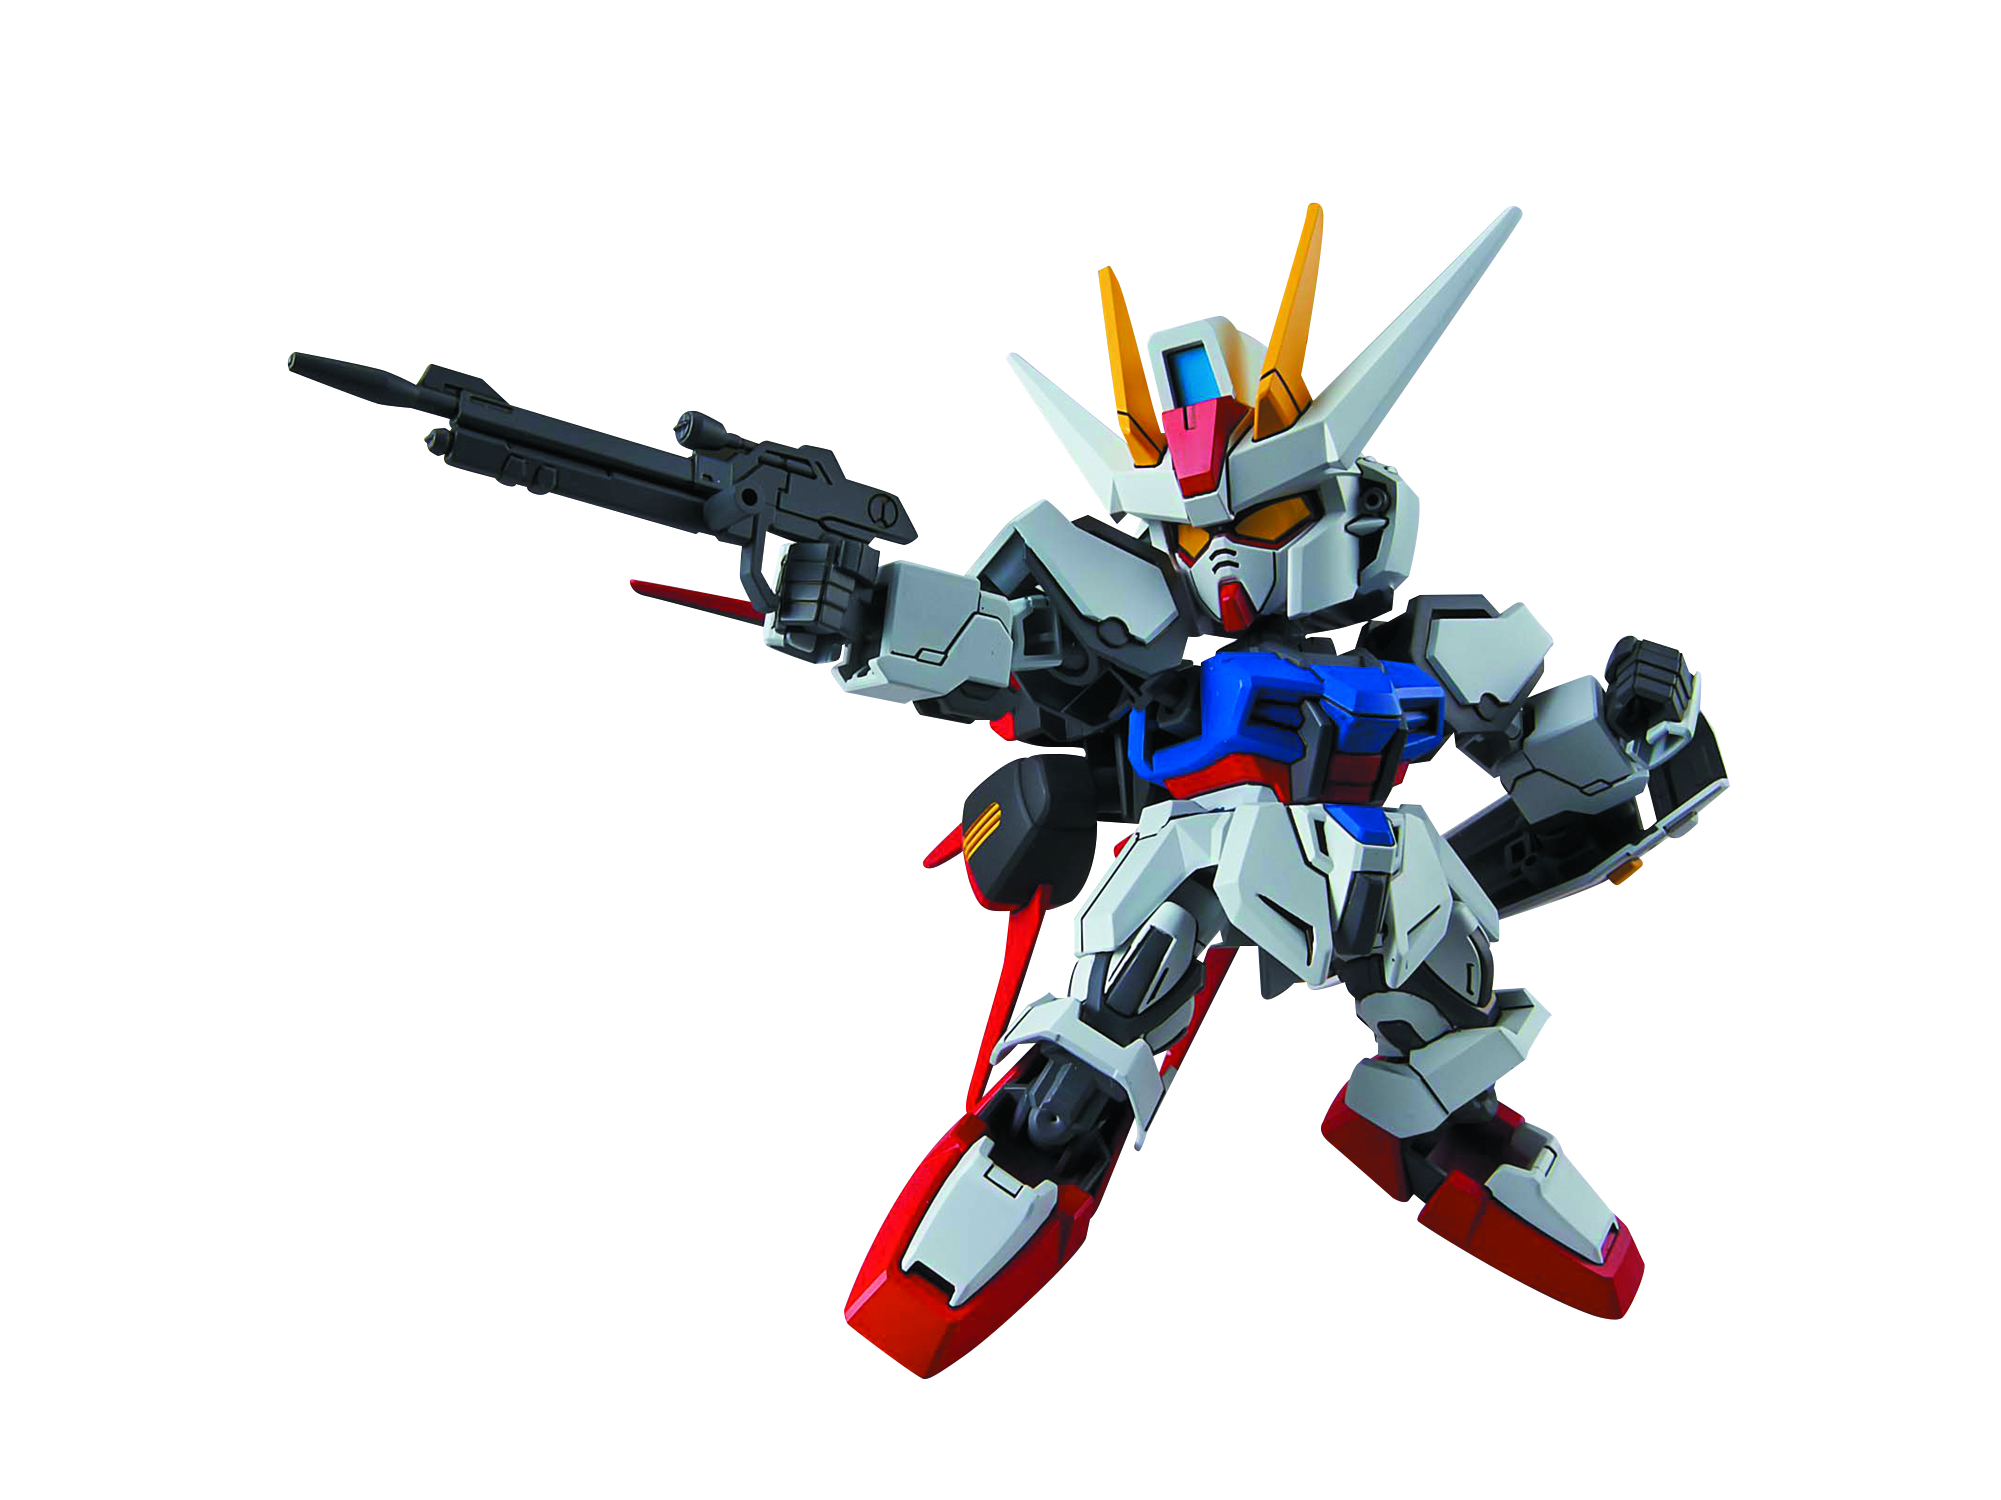 Bandai Hobby SD Ex-standard Aile Strike Gundam Action Figure Bans6728 for sale online 